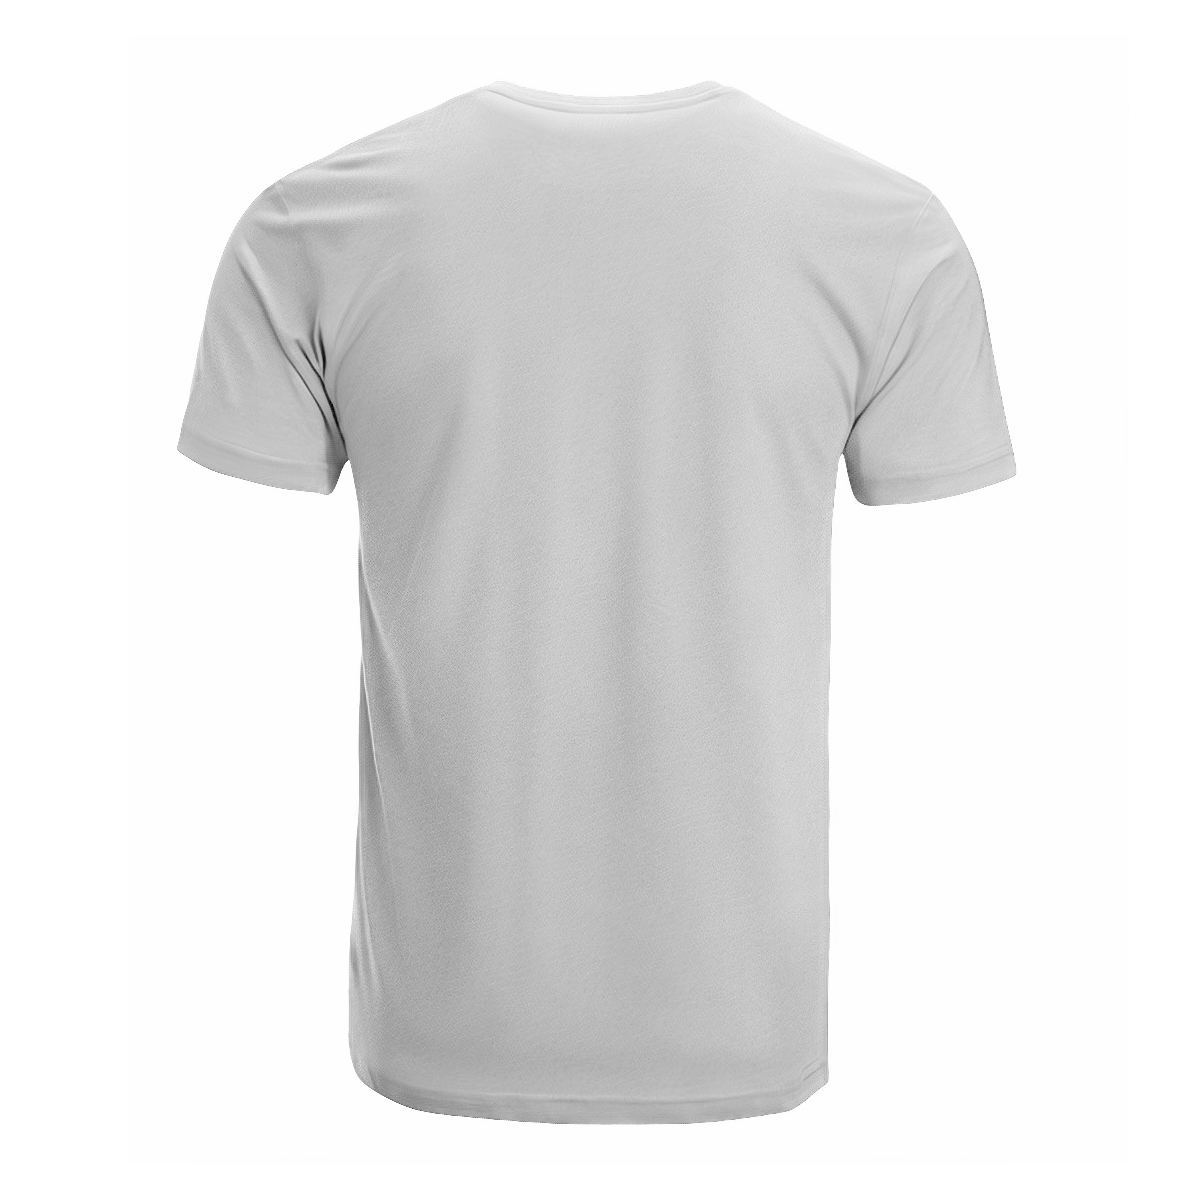 Agnew Tartan Crest T-shirt - I'm not yelling style